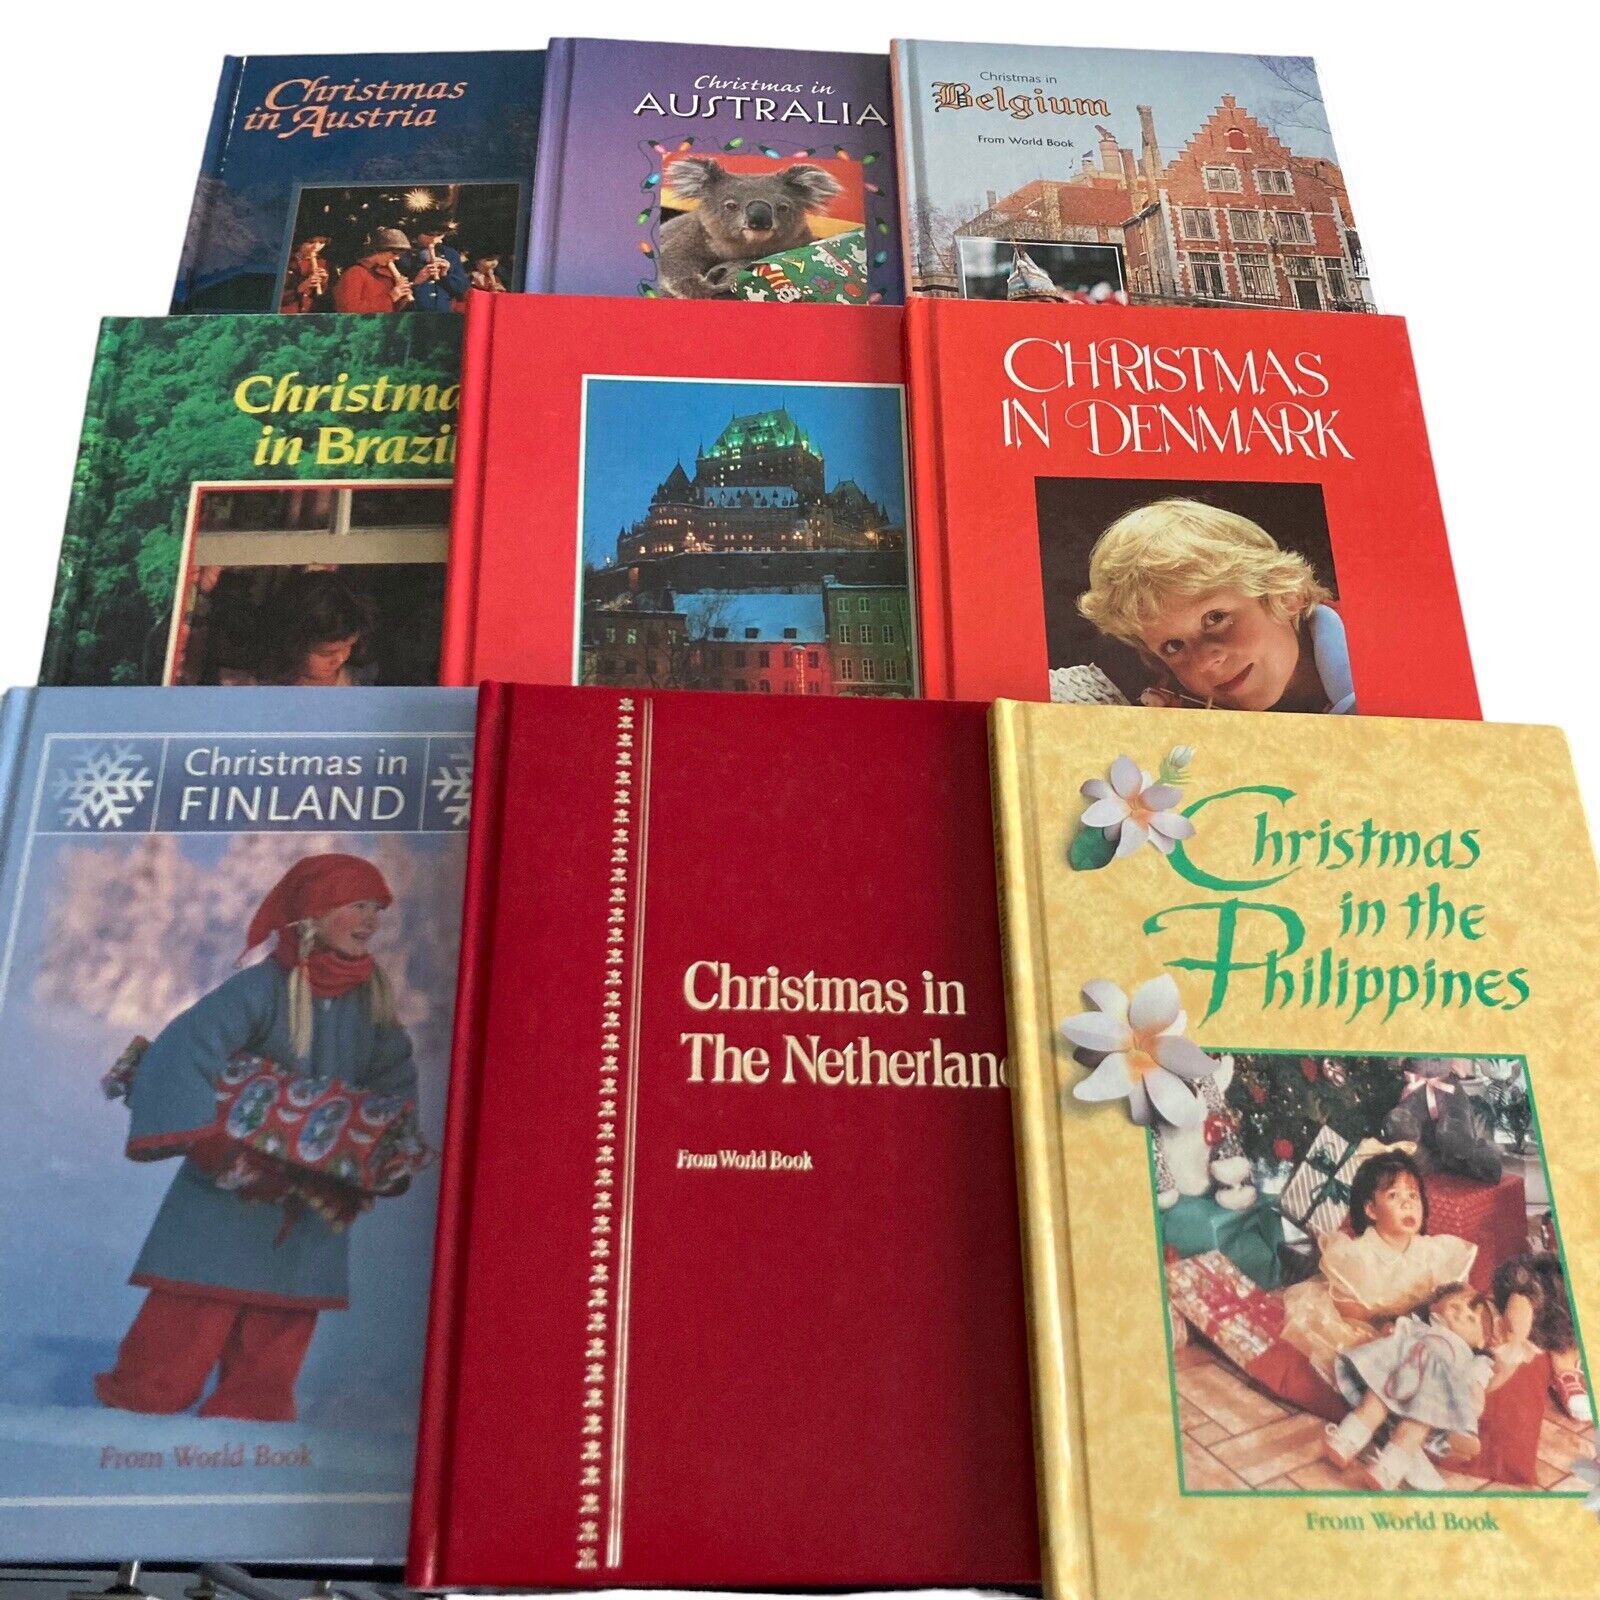 CHRISTMAS Around the World Book From World Book Austria Australia Lot of 9 Books